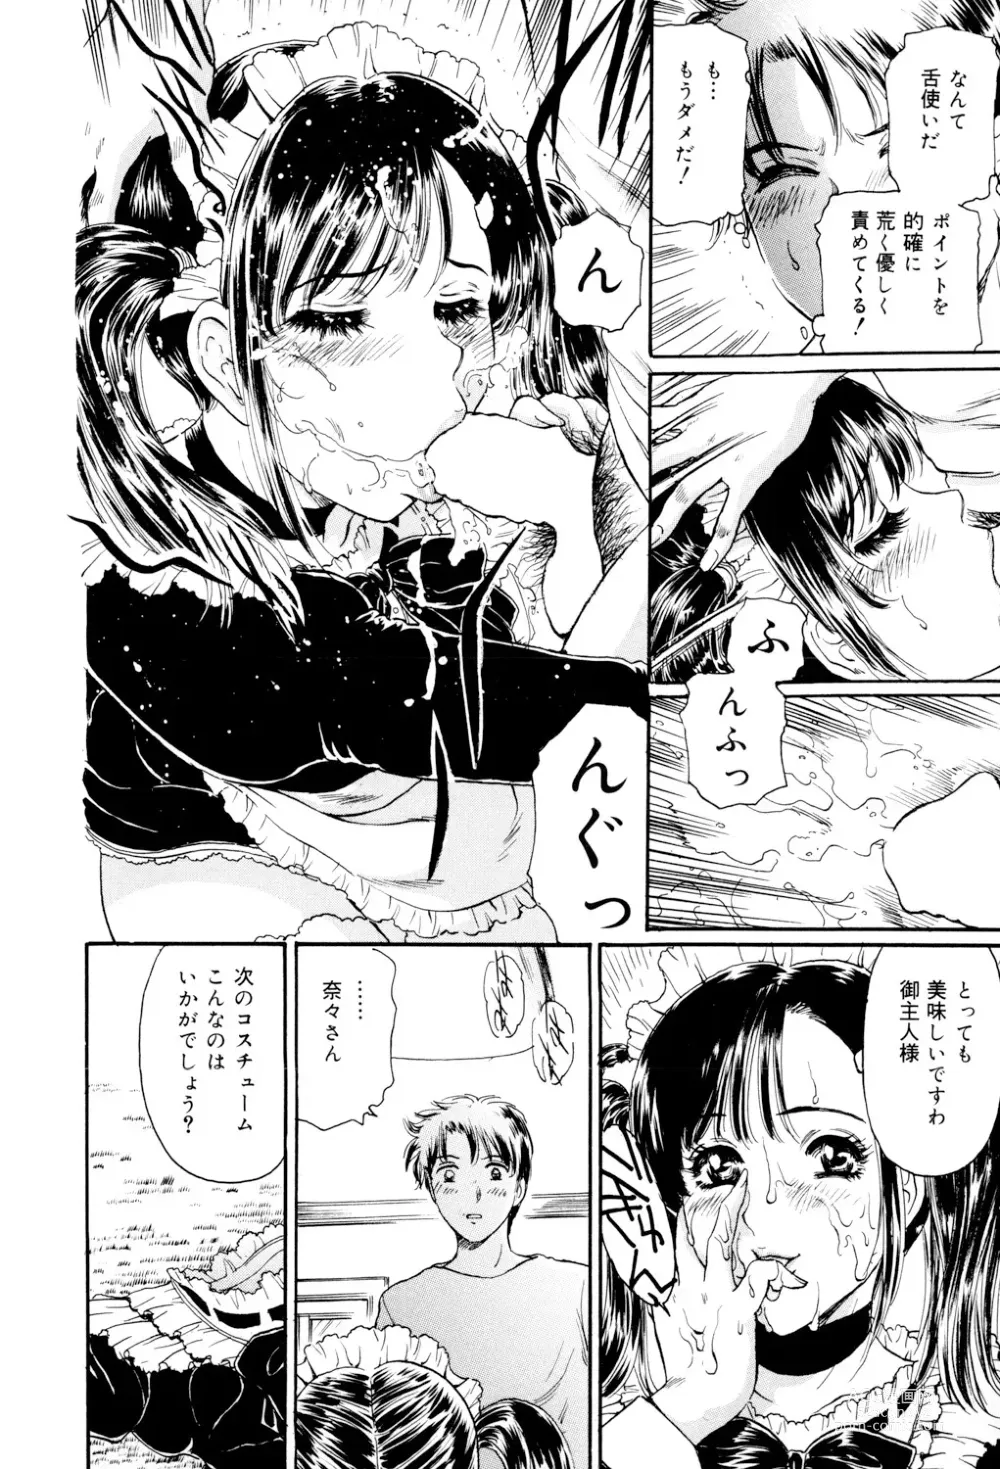 Page 13 of manga Mecha Mote Furin